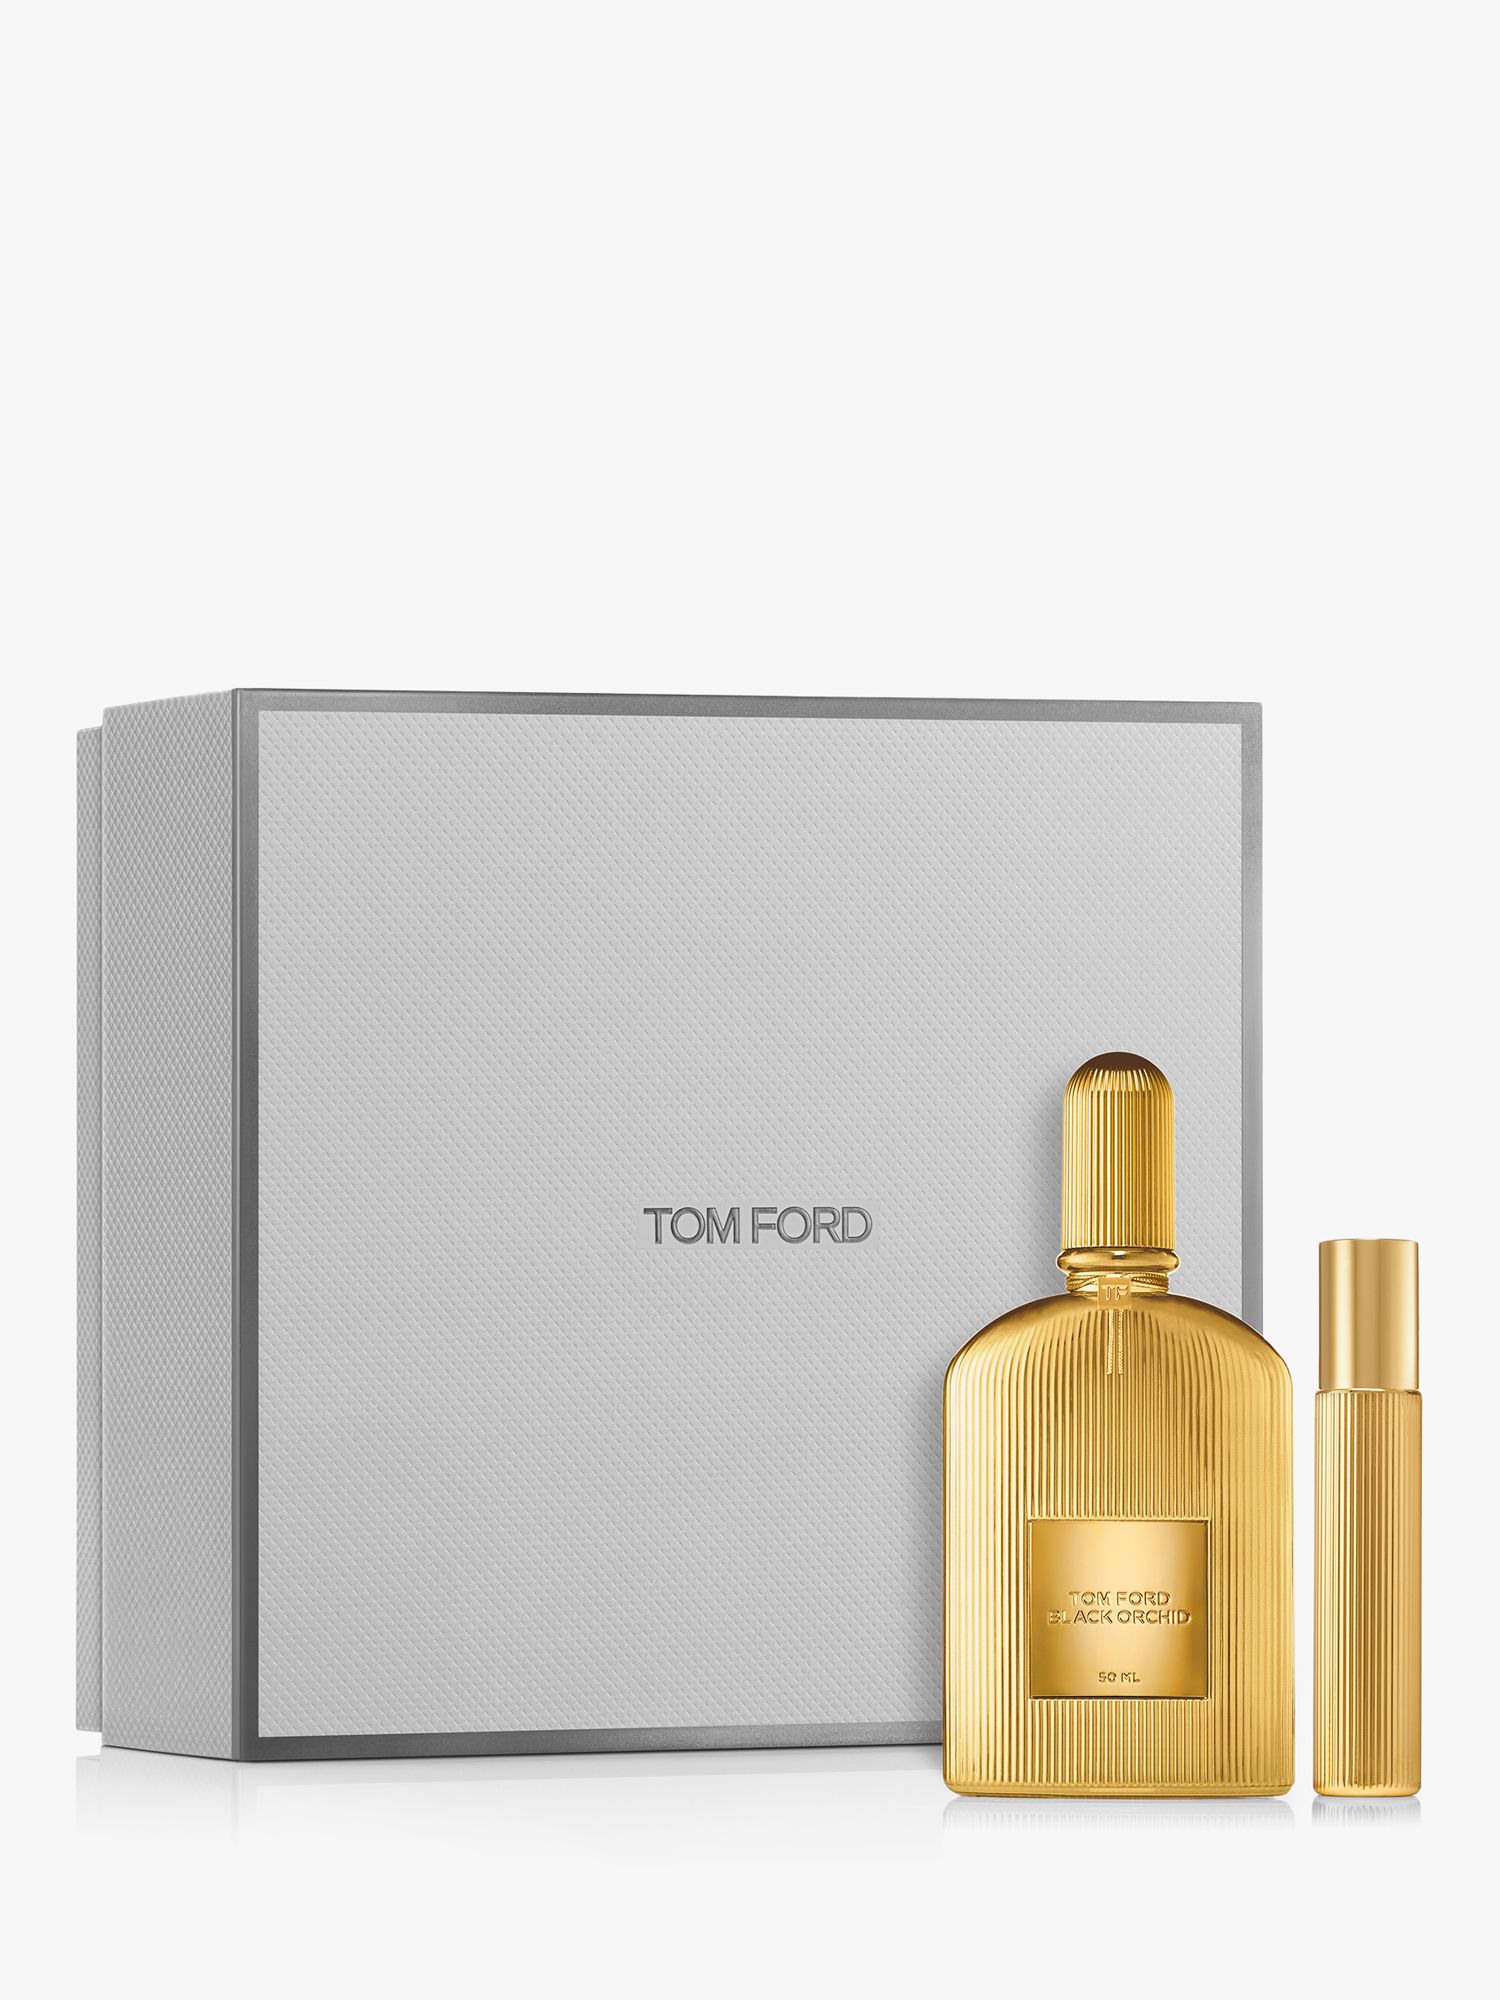 TOM FORD Black Orchid Parfum 50ml Fragrance Gift Set